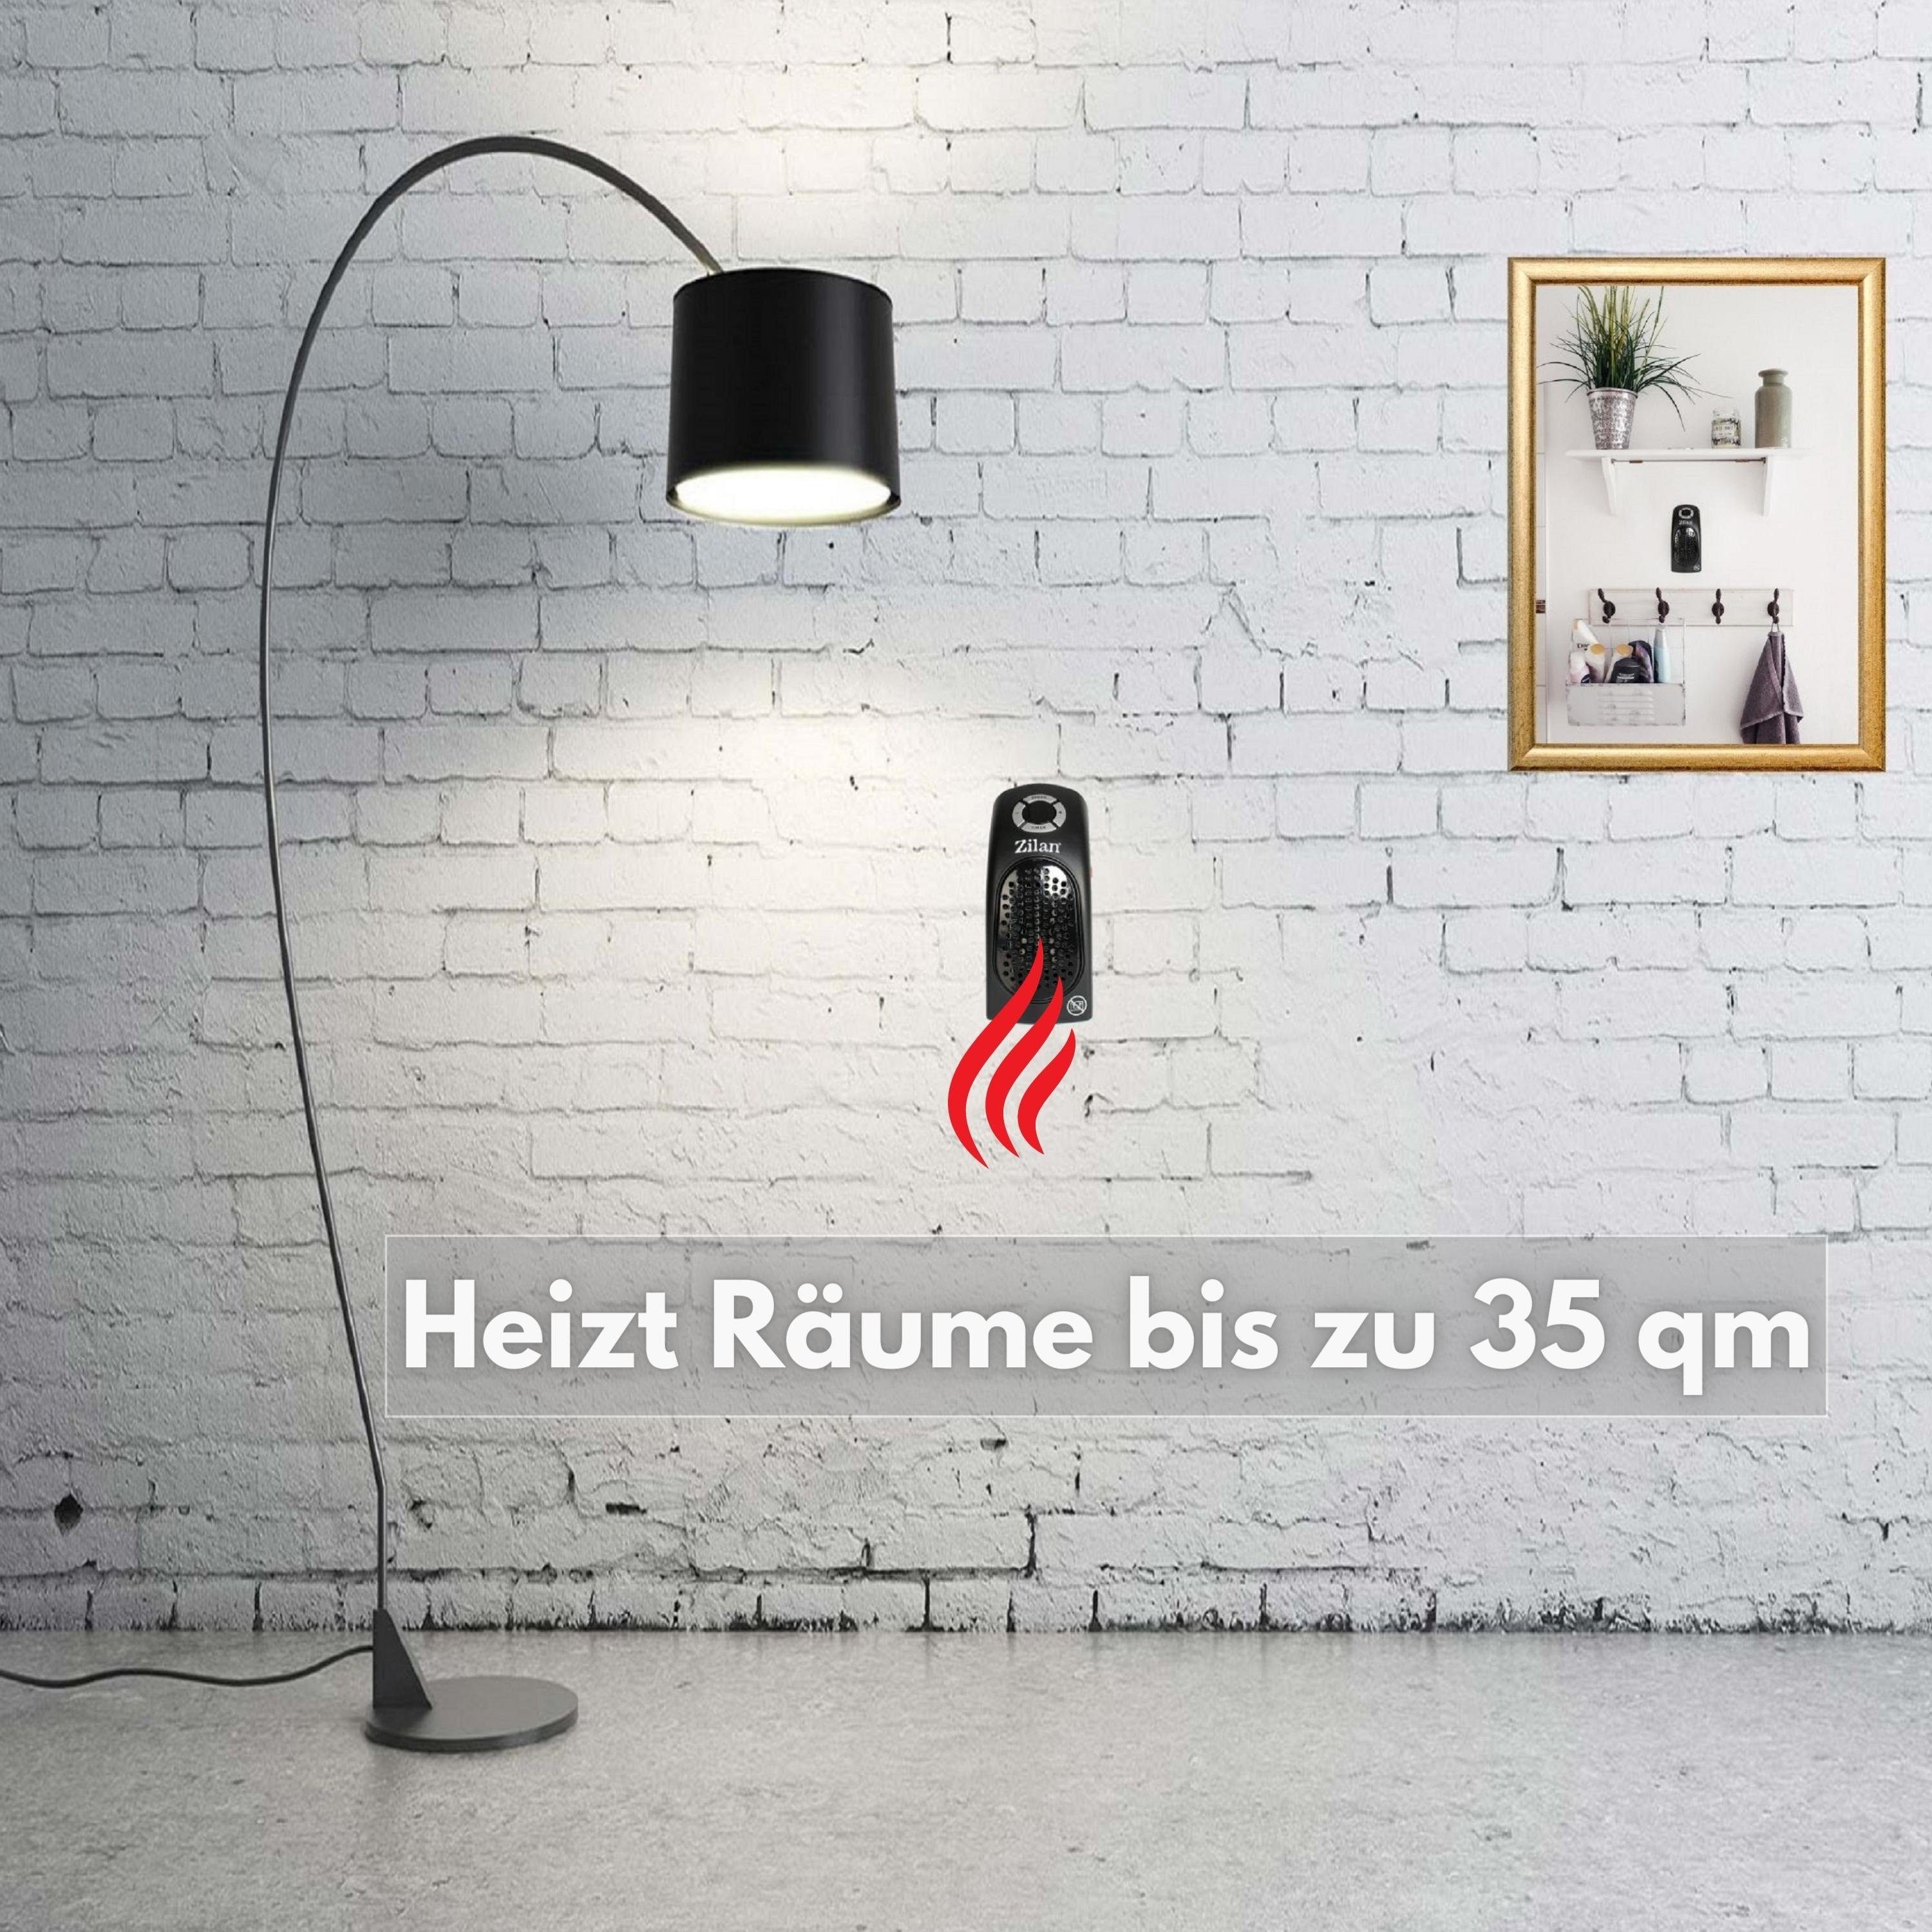 Zilan Timer, 12h 2000 LED-Anzeige ZLN-2281, W, Kompakt, Keramikheizlüfter